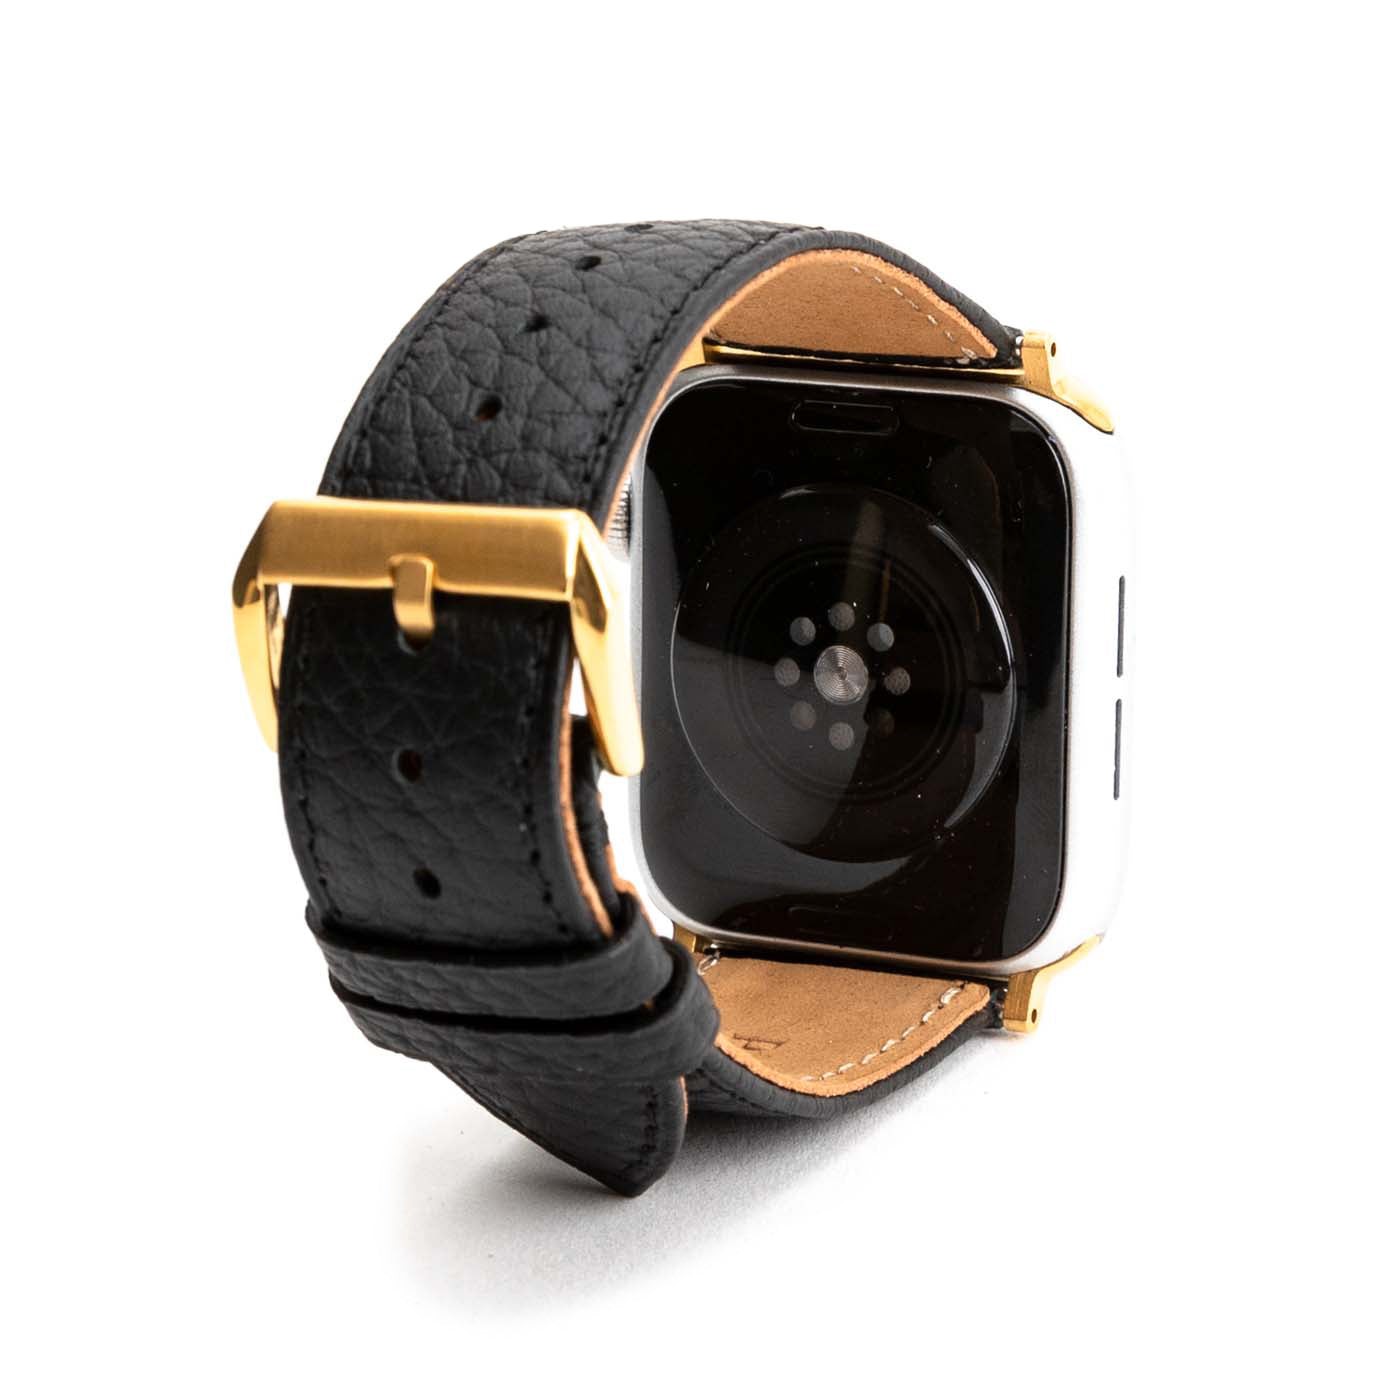 Slim Leather Apple Watch Band